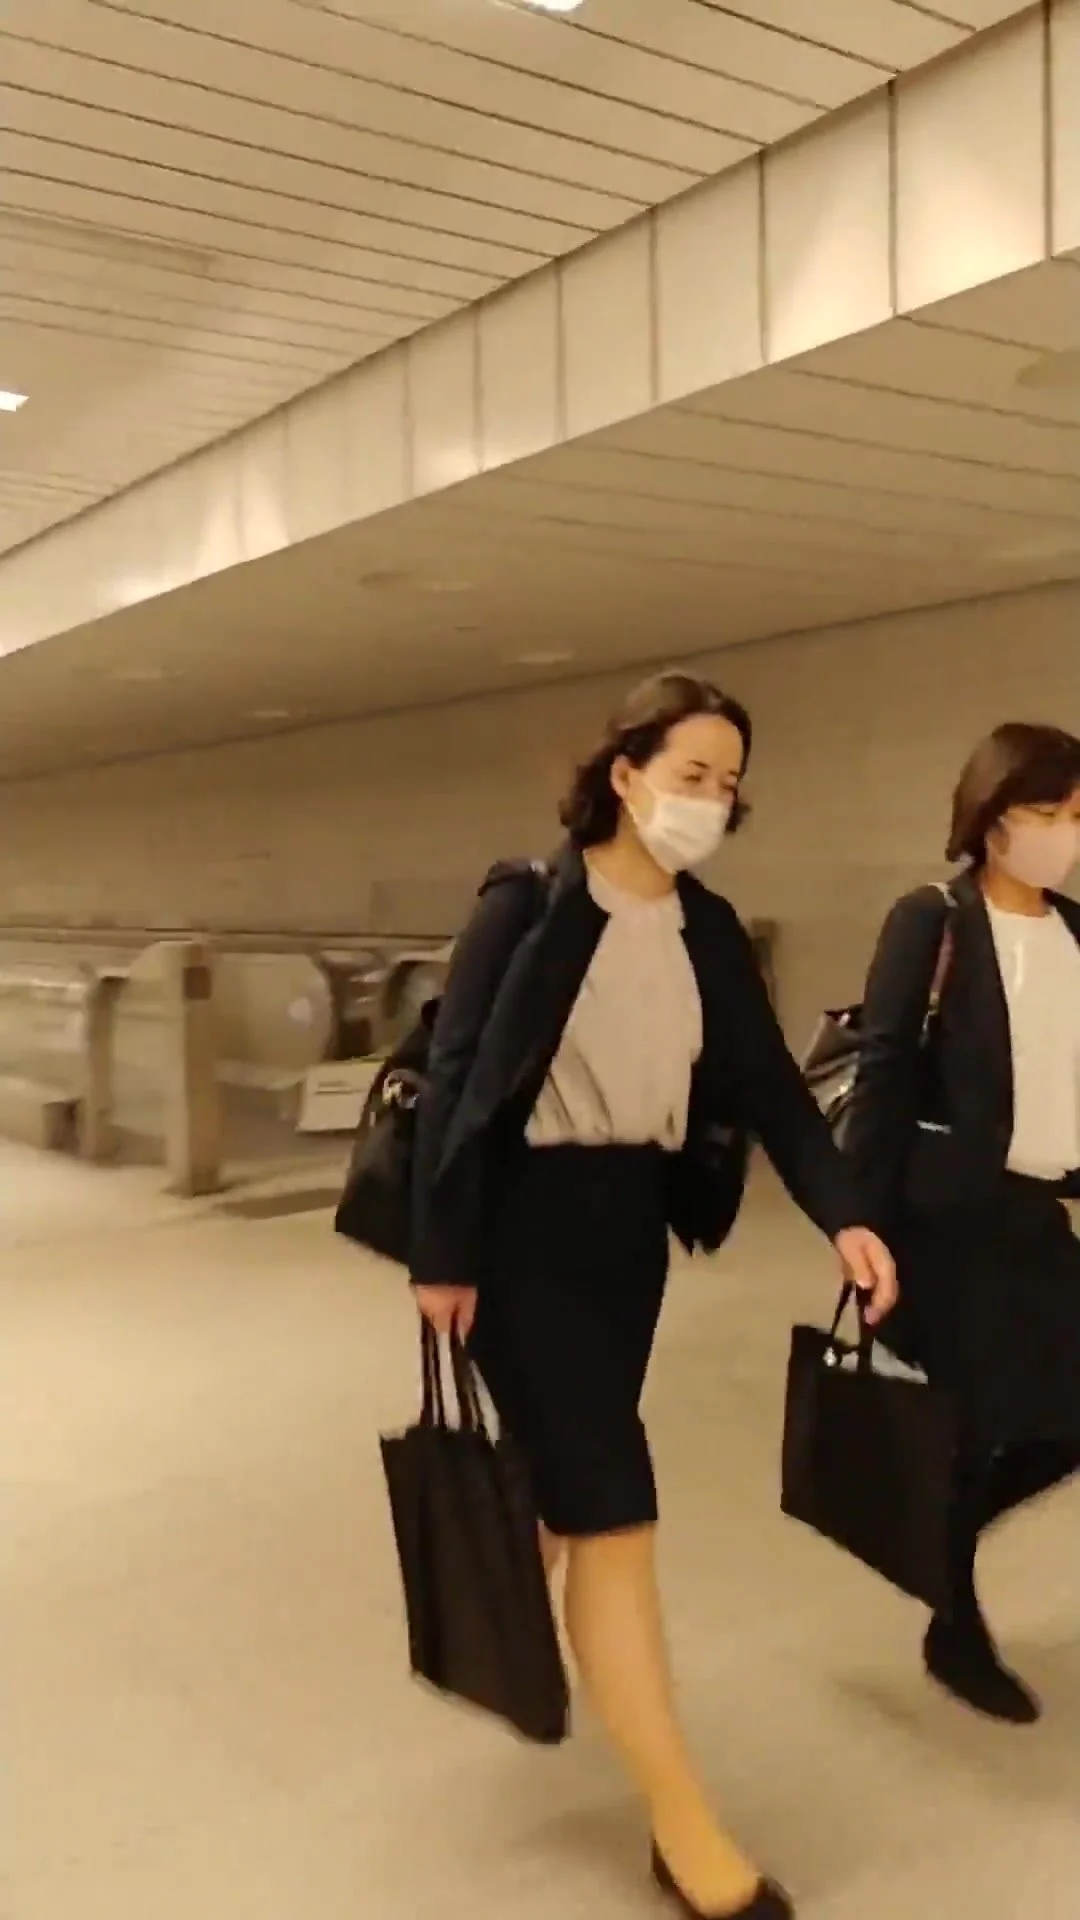 Japanese Ladies Upskirt - video 49 - ThisVid.com